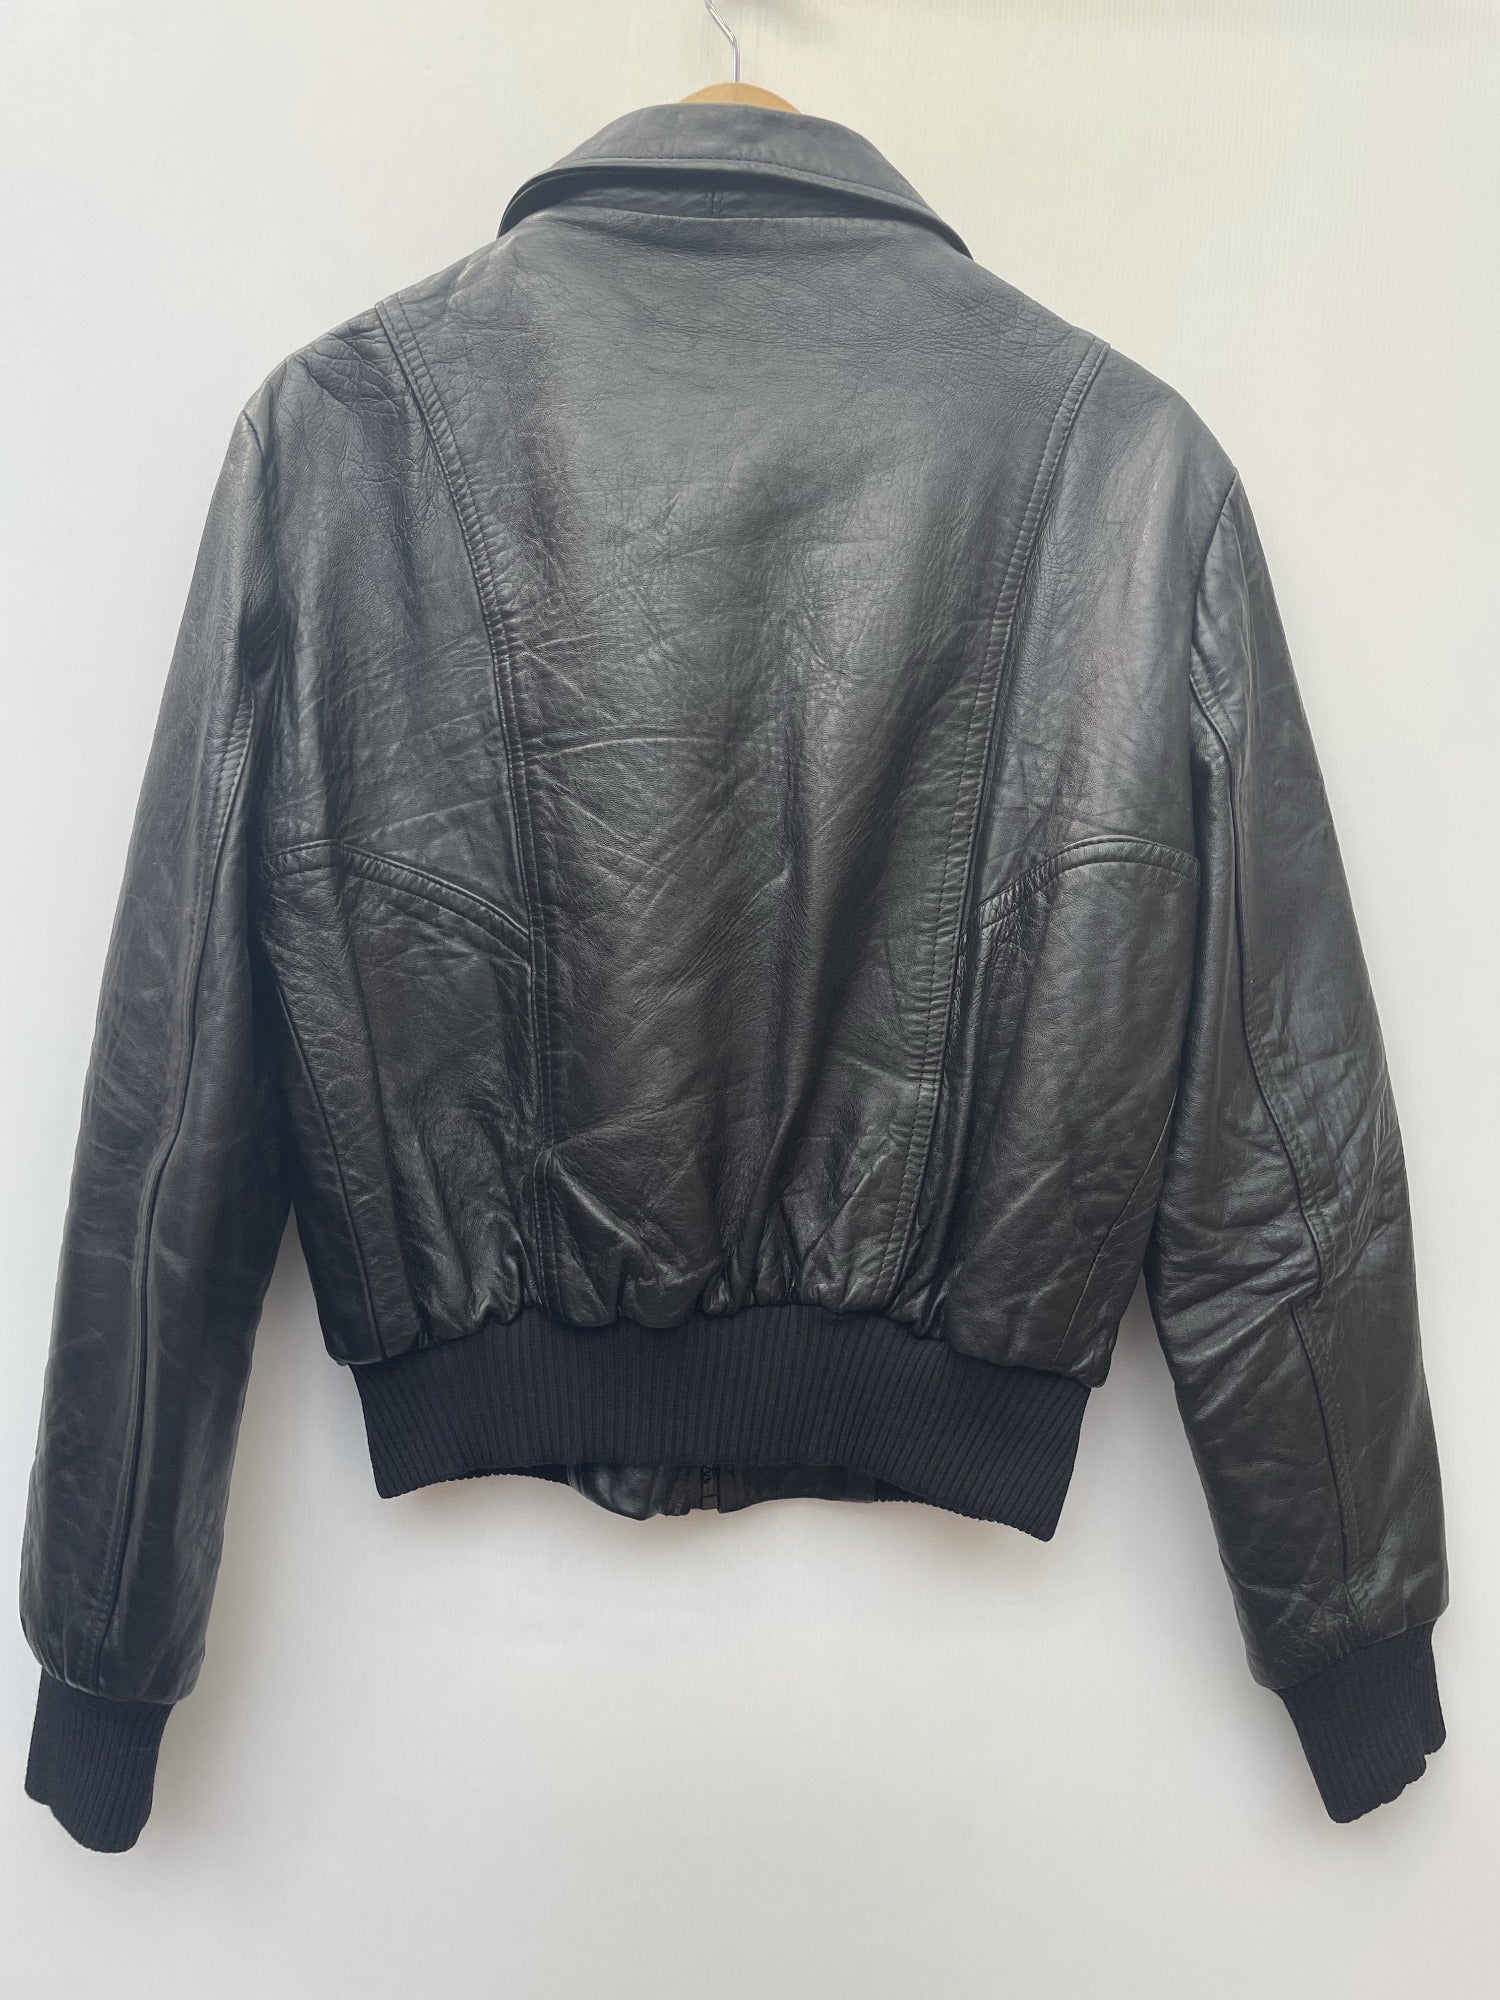 1970s Shortcut Leather Jacket - Size S - Vintage Clothing ...